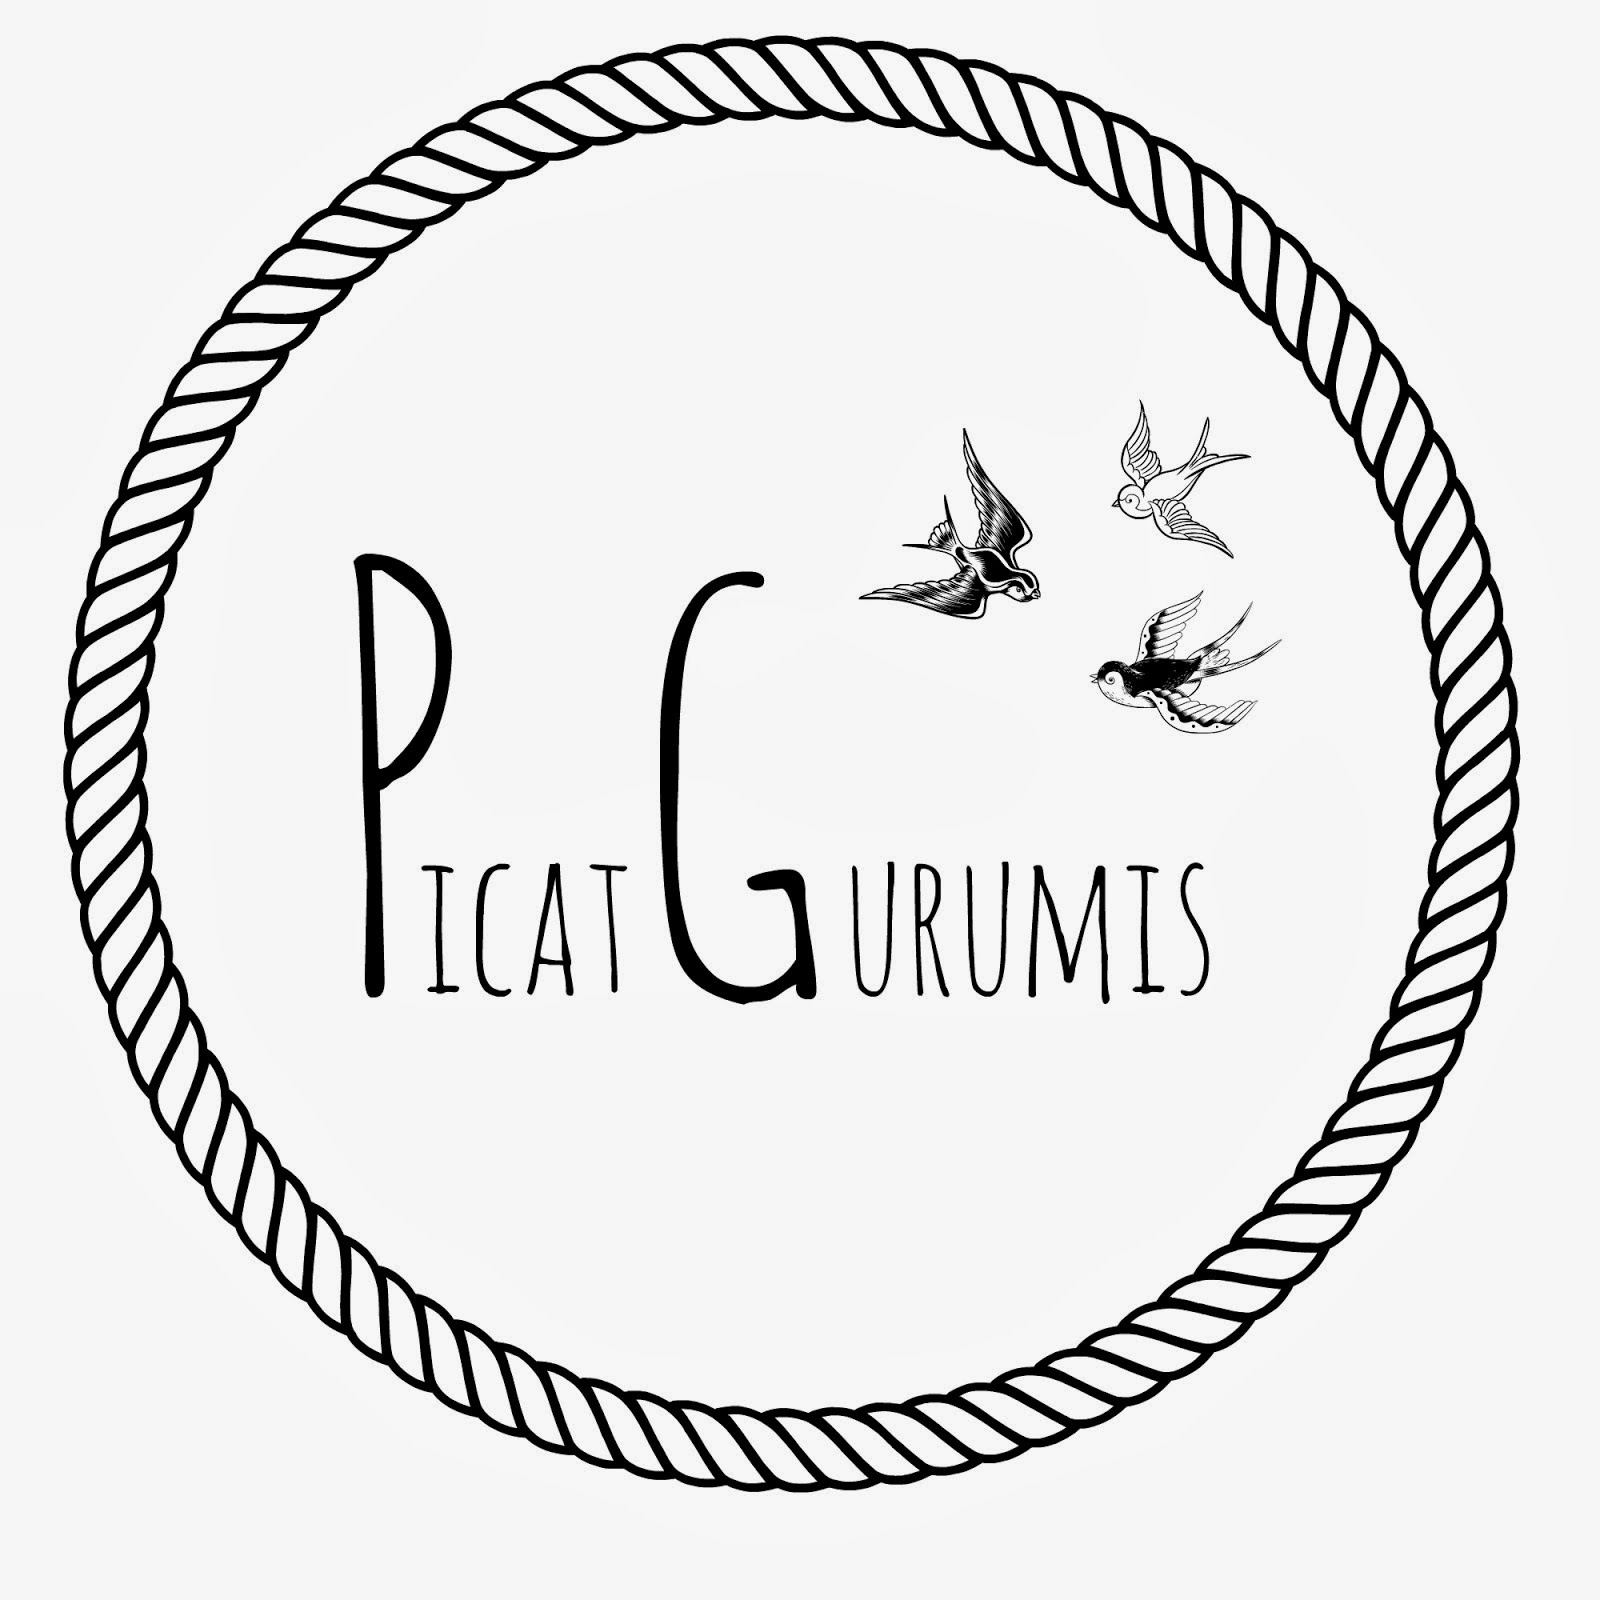 PicatGurumis